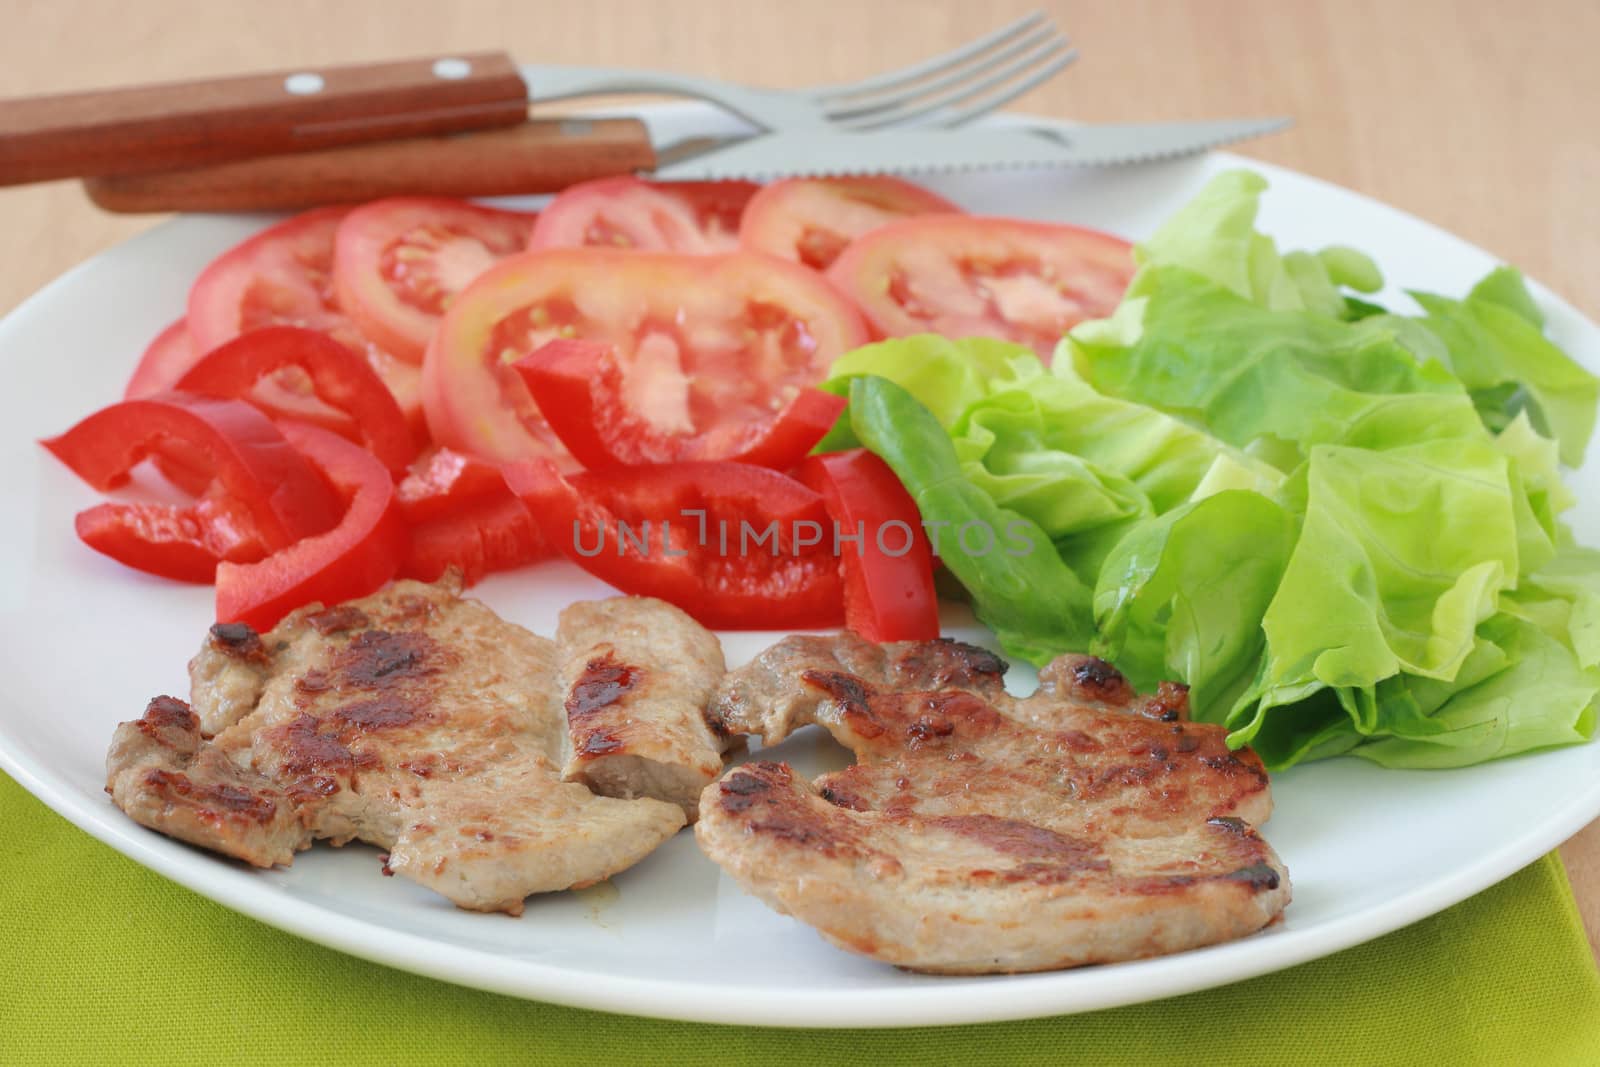 fried pork with salad on the plate by nataliamylova